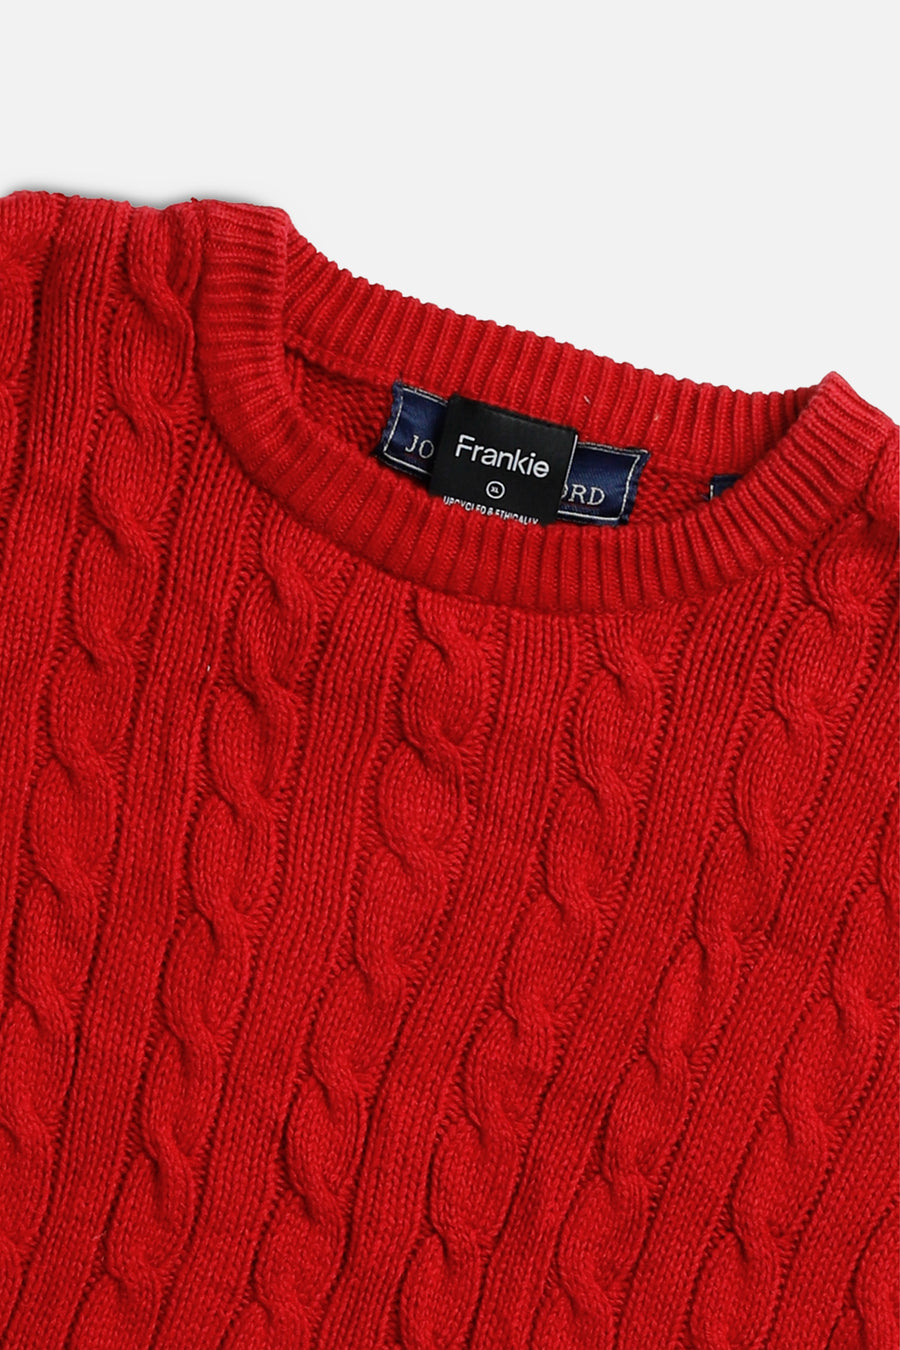 Rework Crop Knit Sweater - XL